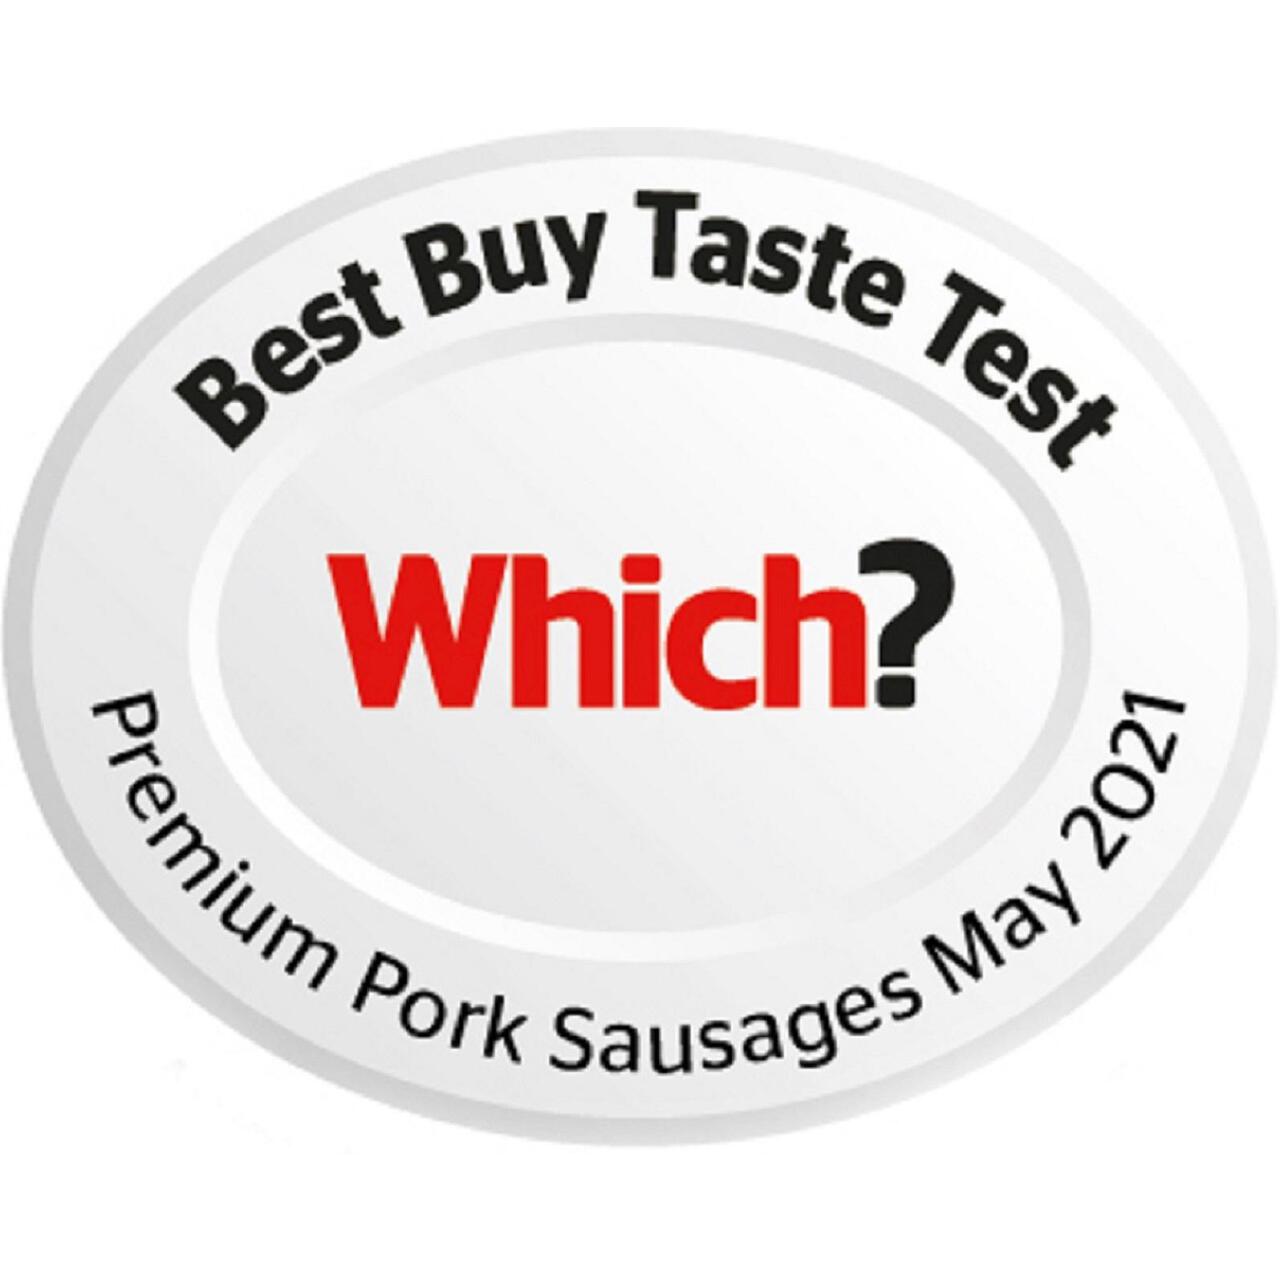 The Black Farmer Premium Pork Sausages 400g